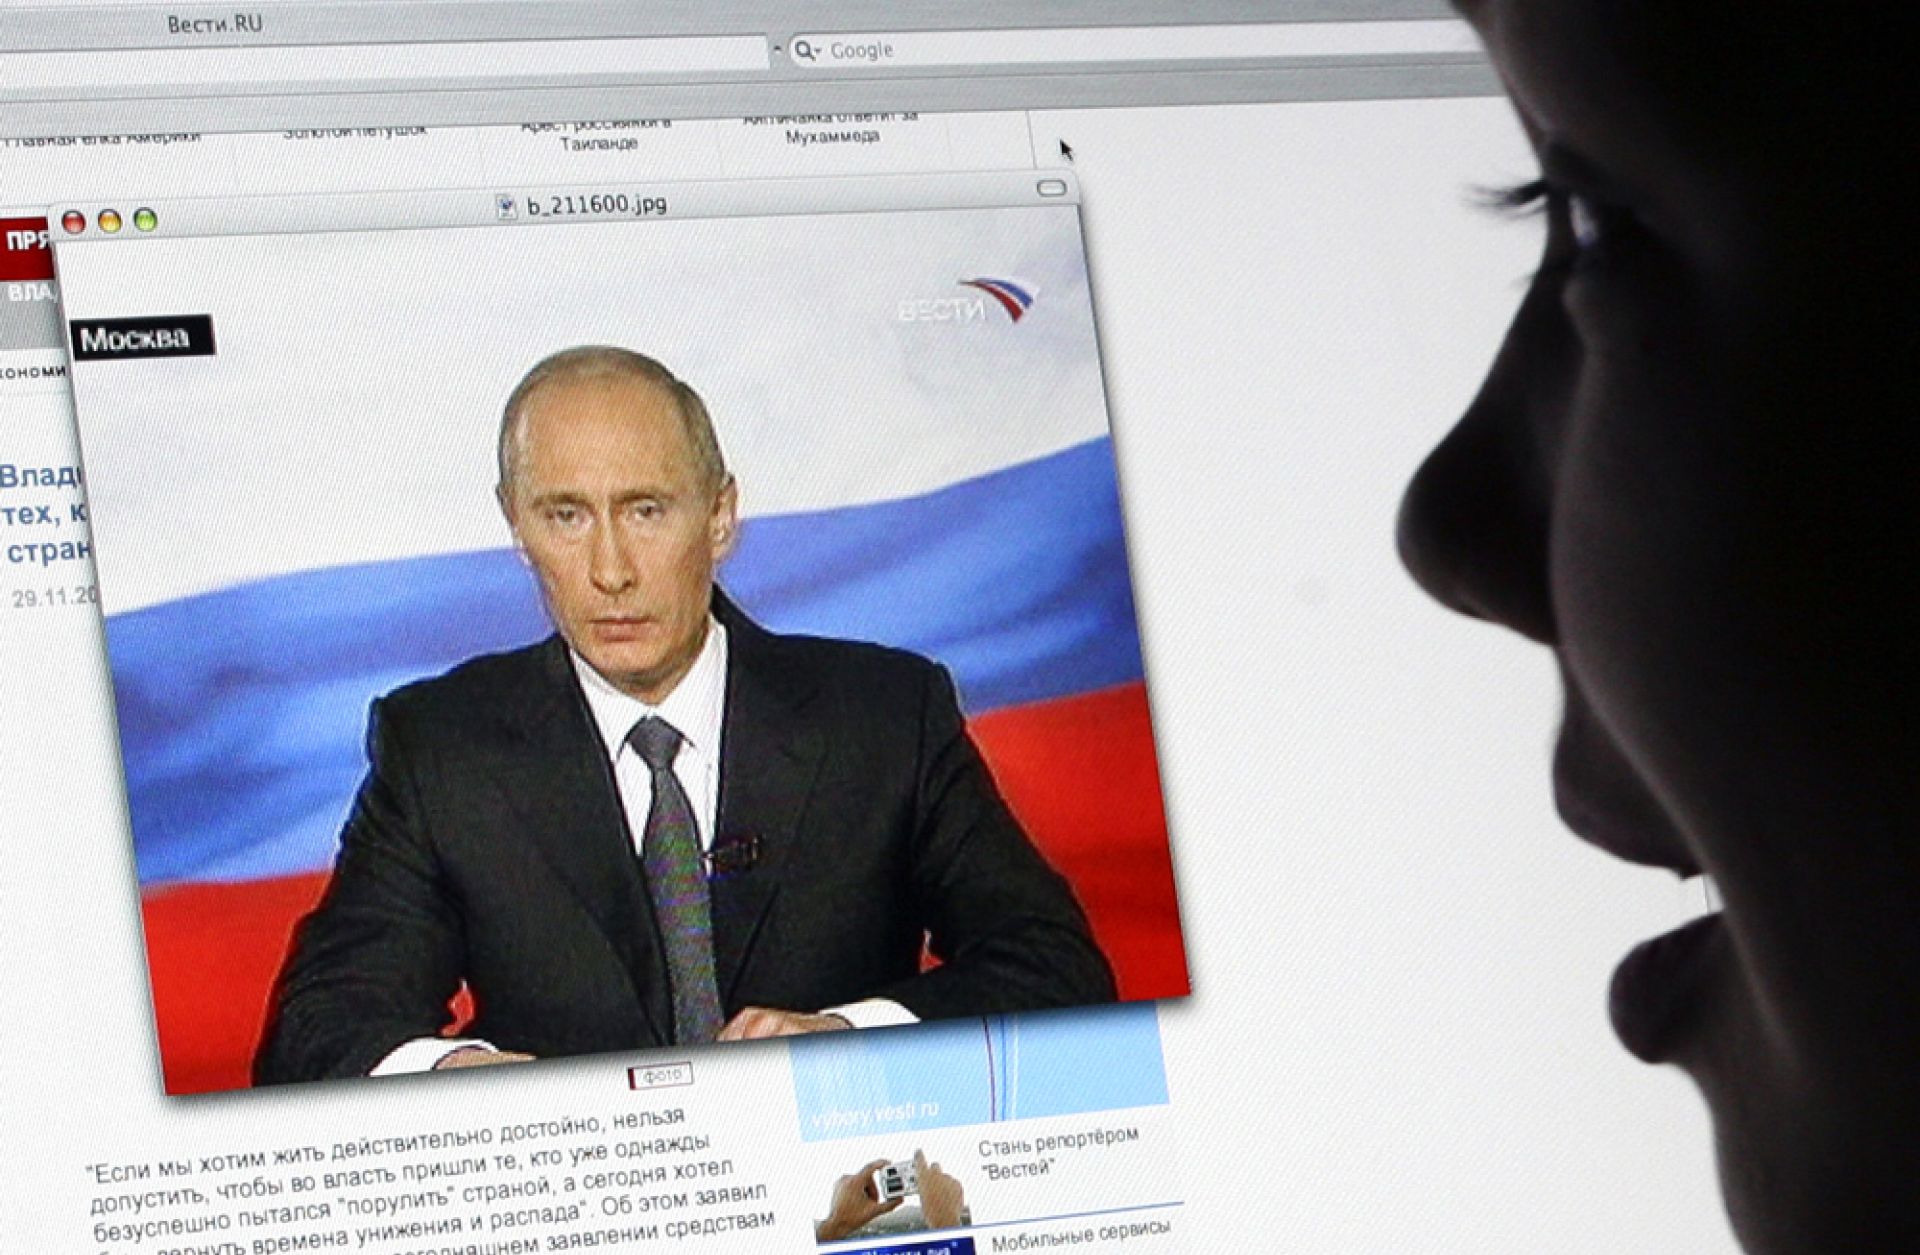 The Kremlin Passes New Internet Restrictions